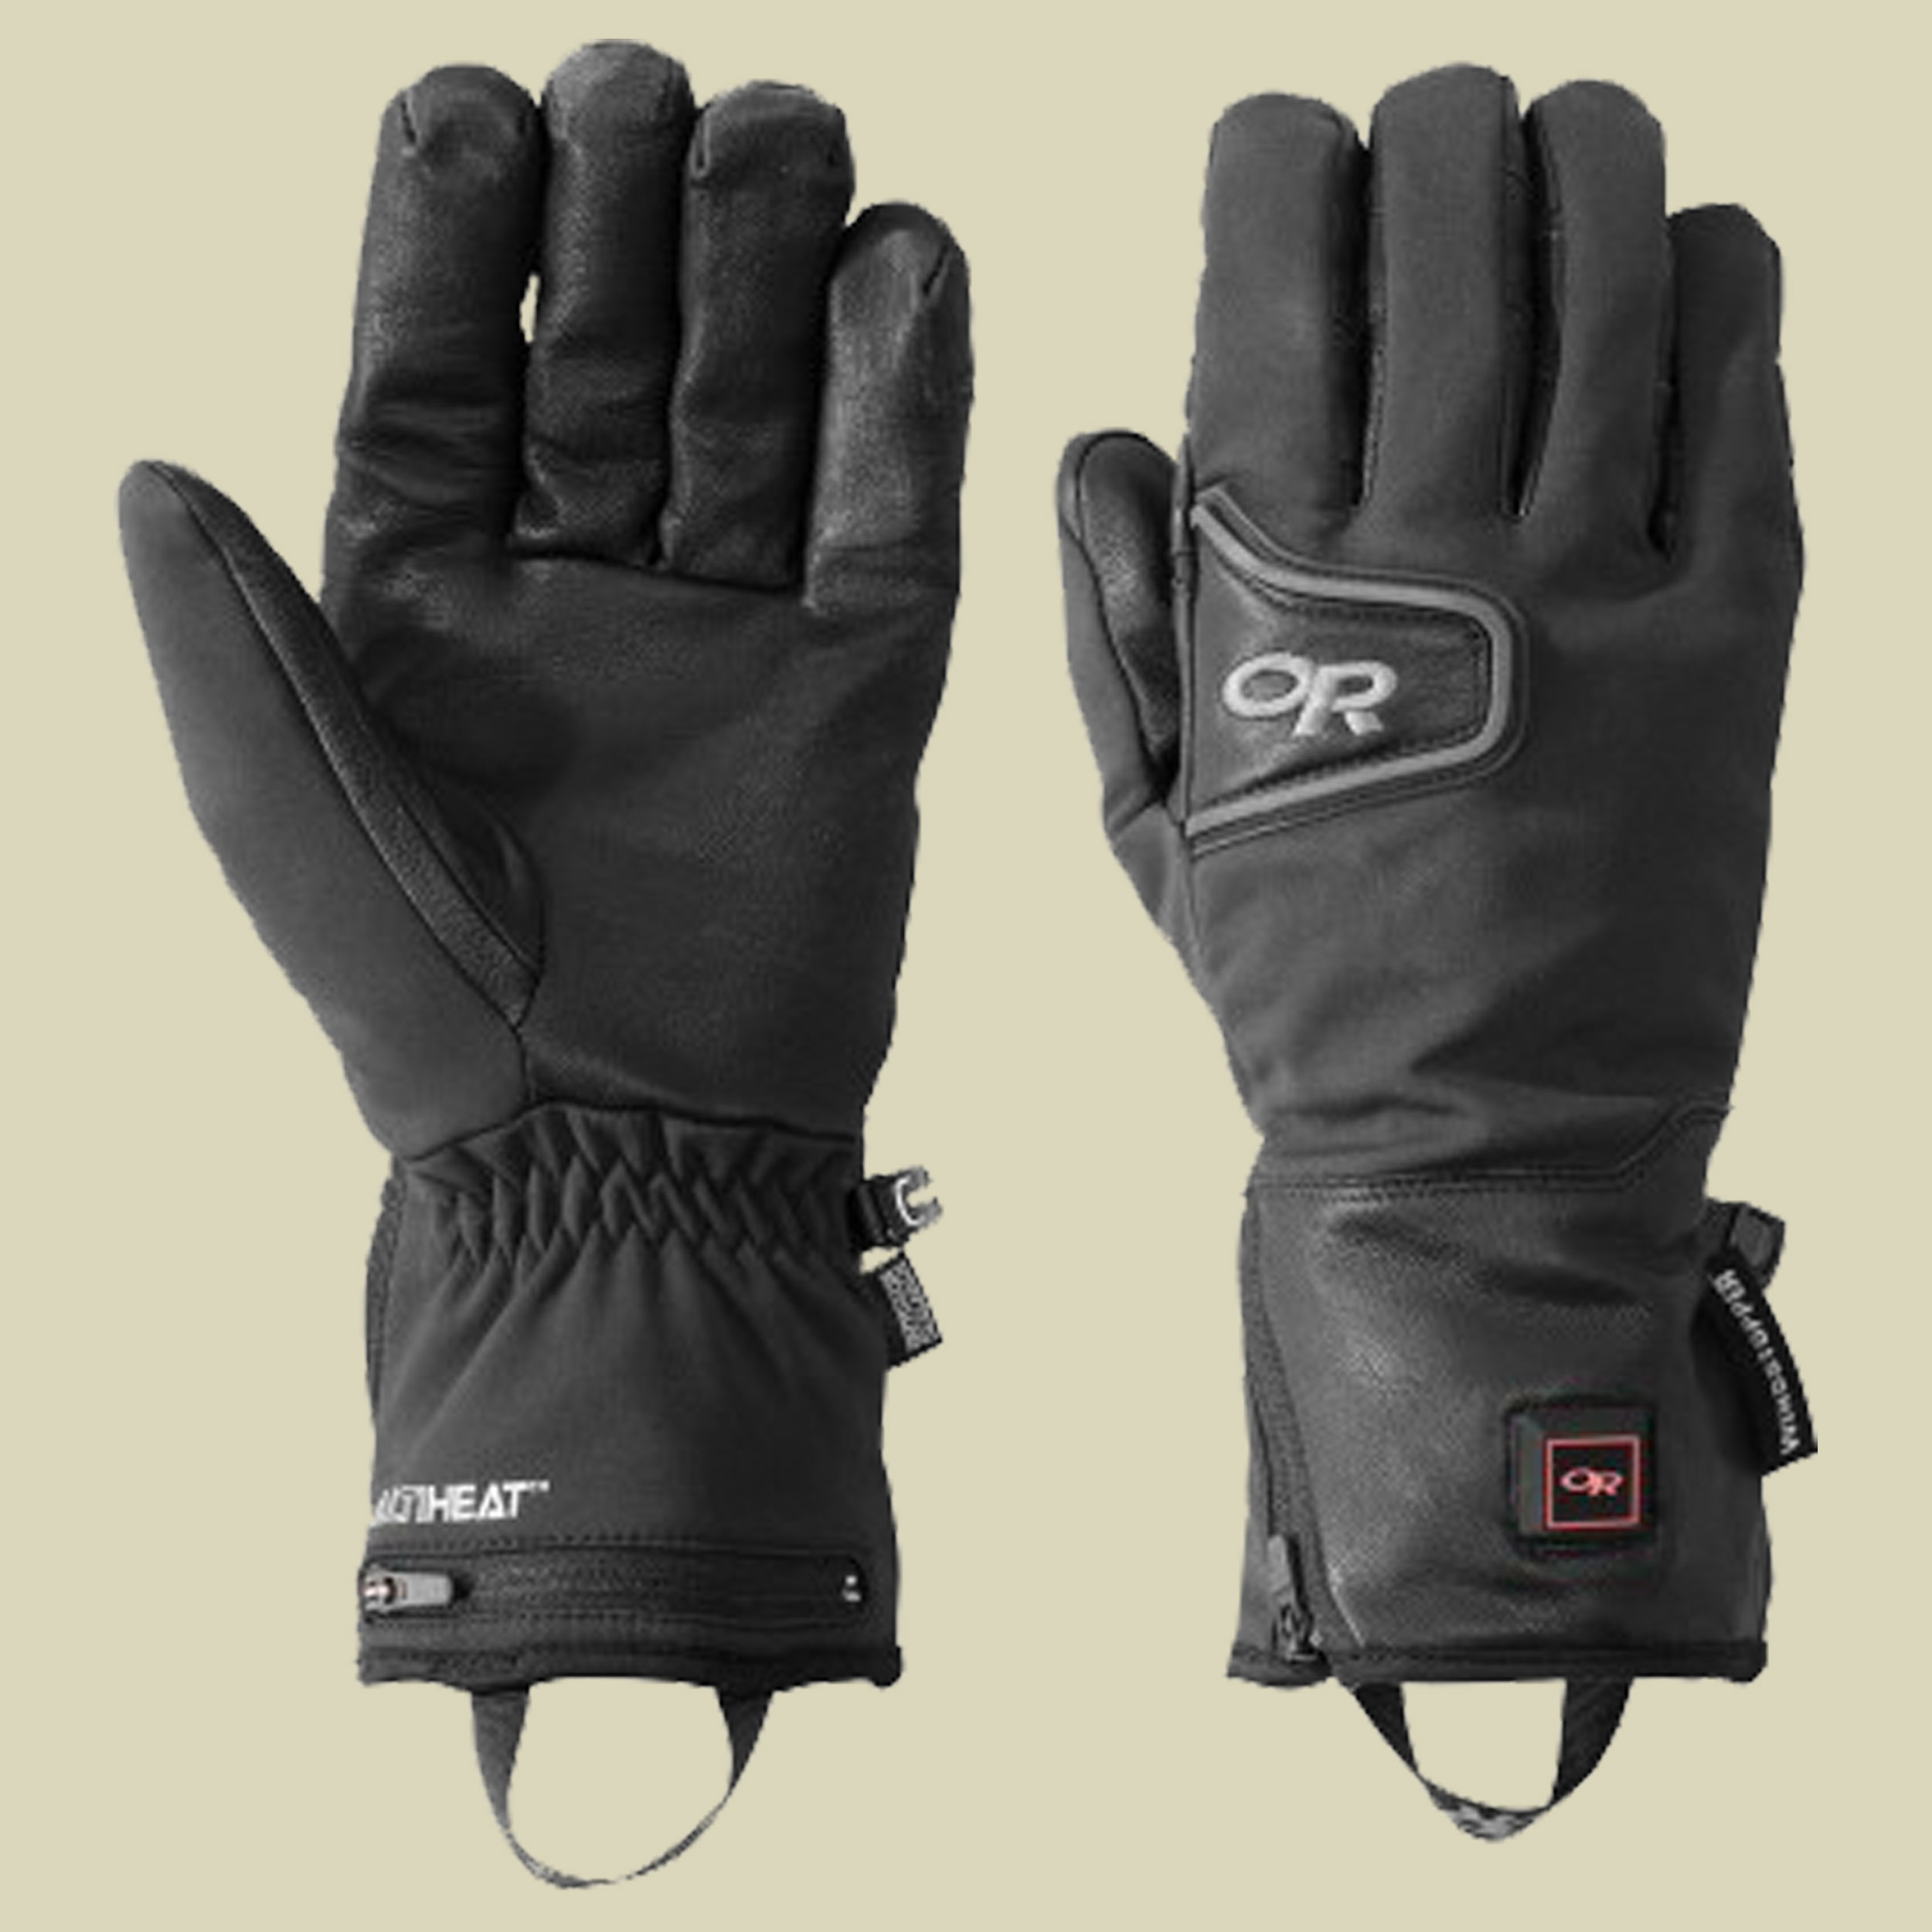 Stormtracker Heated Gloves Größe XS Farbe black